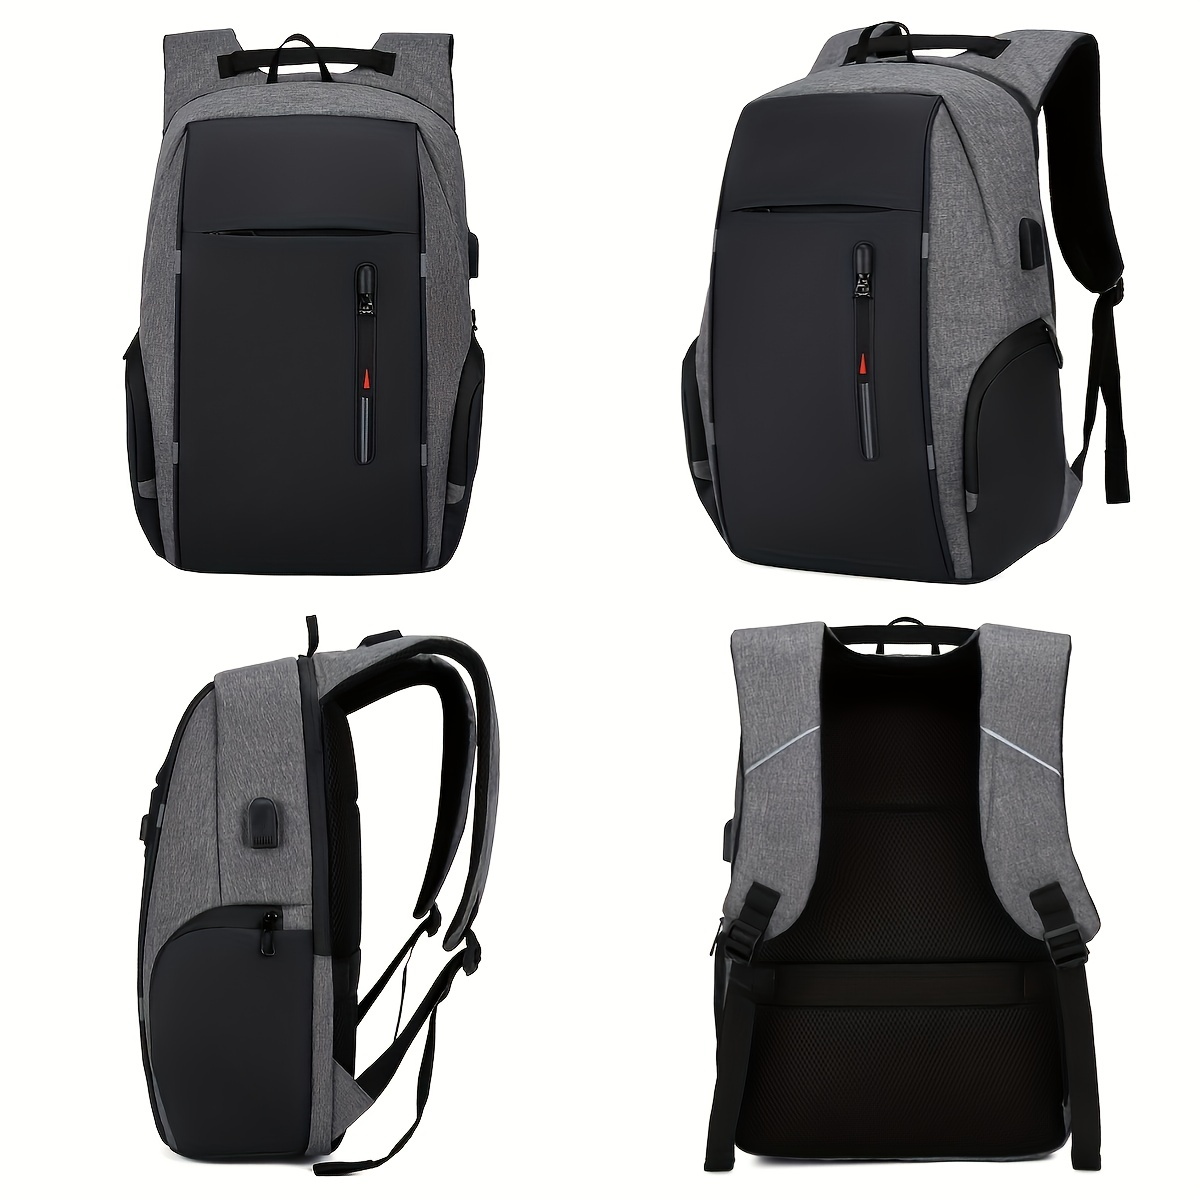 Fashion LouisWill Backpacks Men Laptop Waterproof Travel Bags